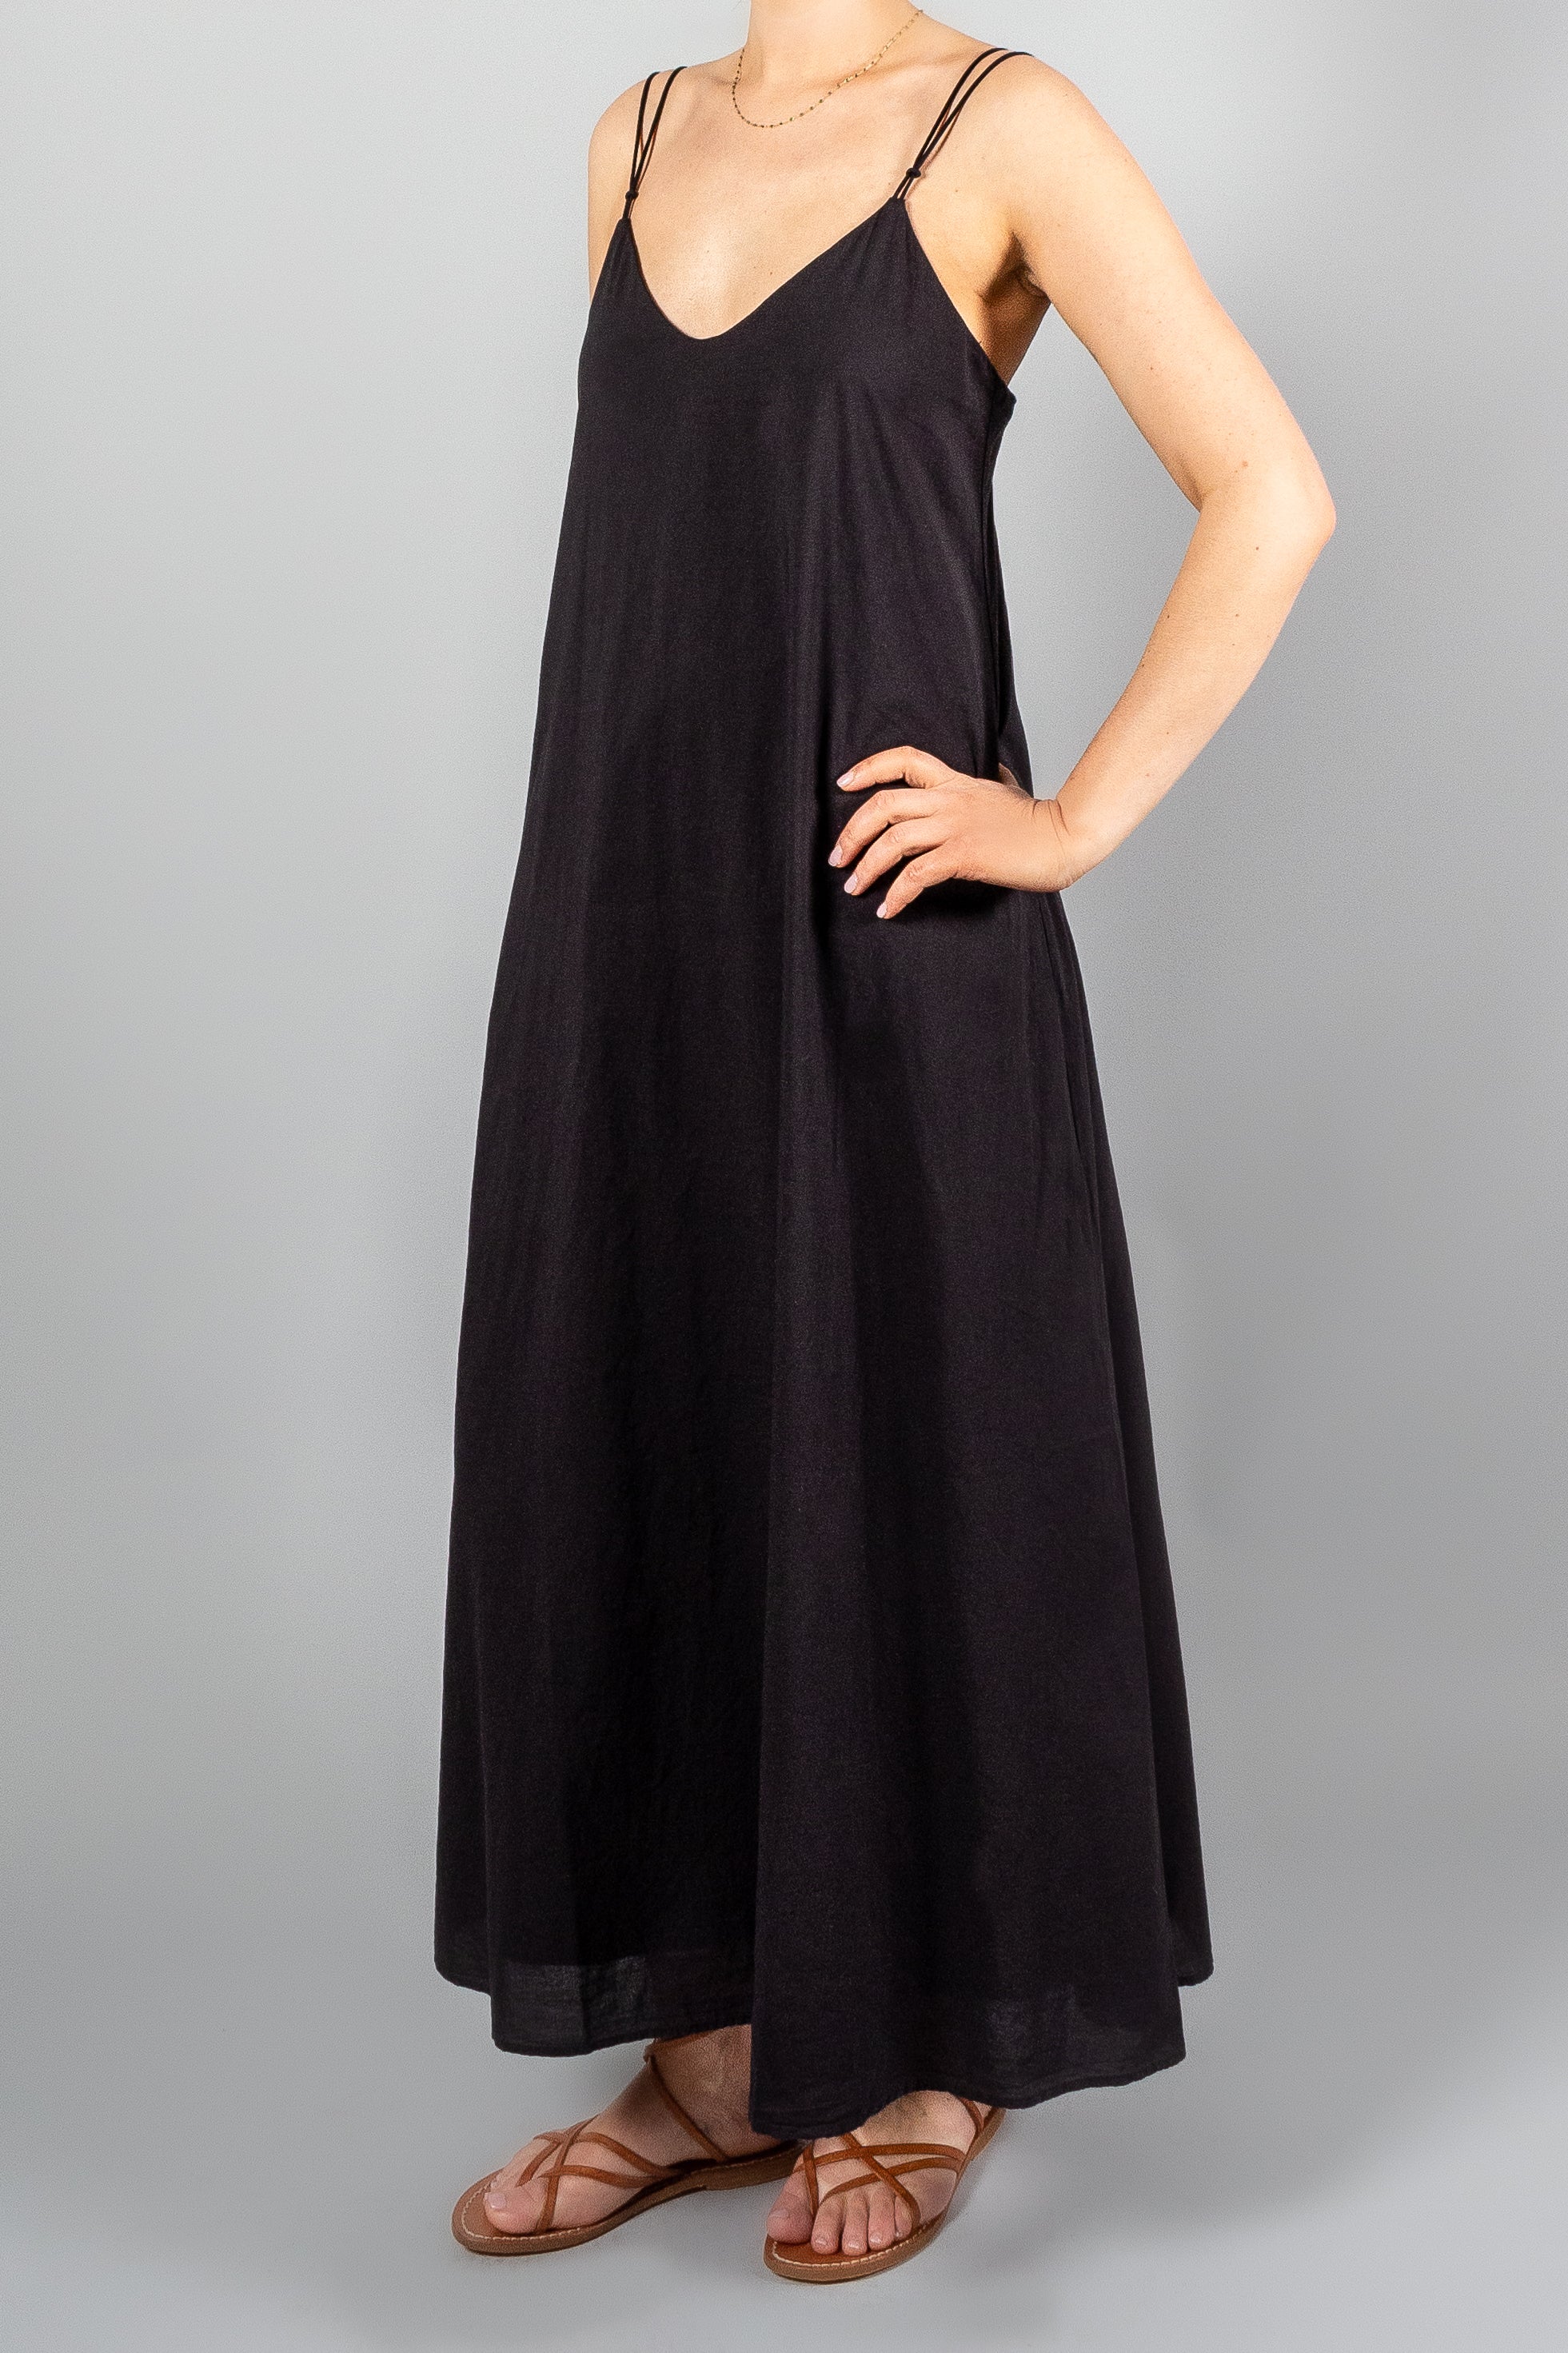 Xirena Teague Dress-Dresses and Jumpsuits-Misch-Boutique-Vancouver-Canada-misch.ca